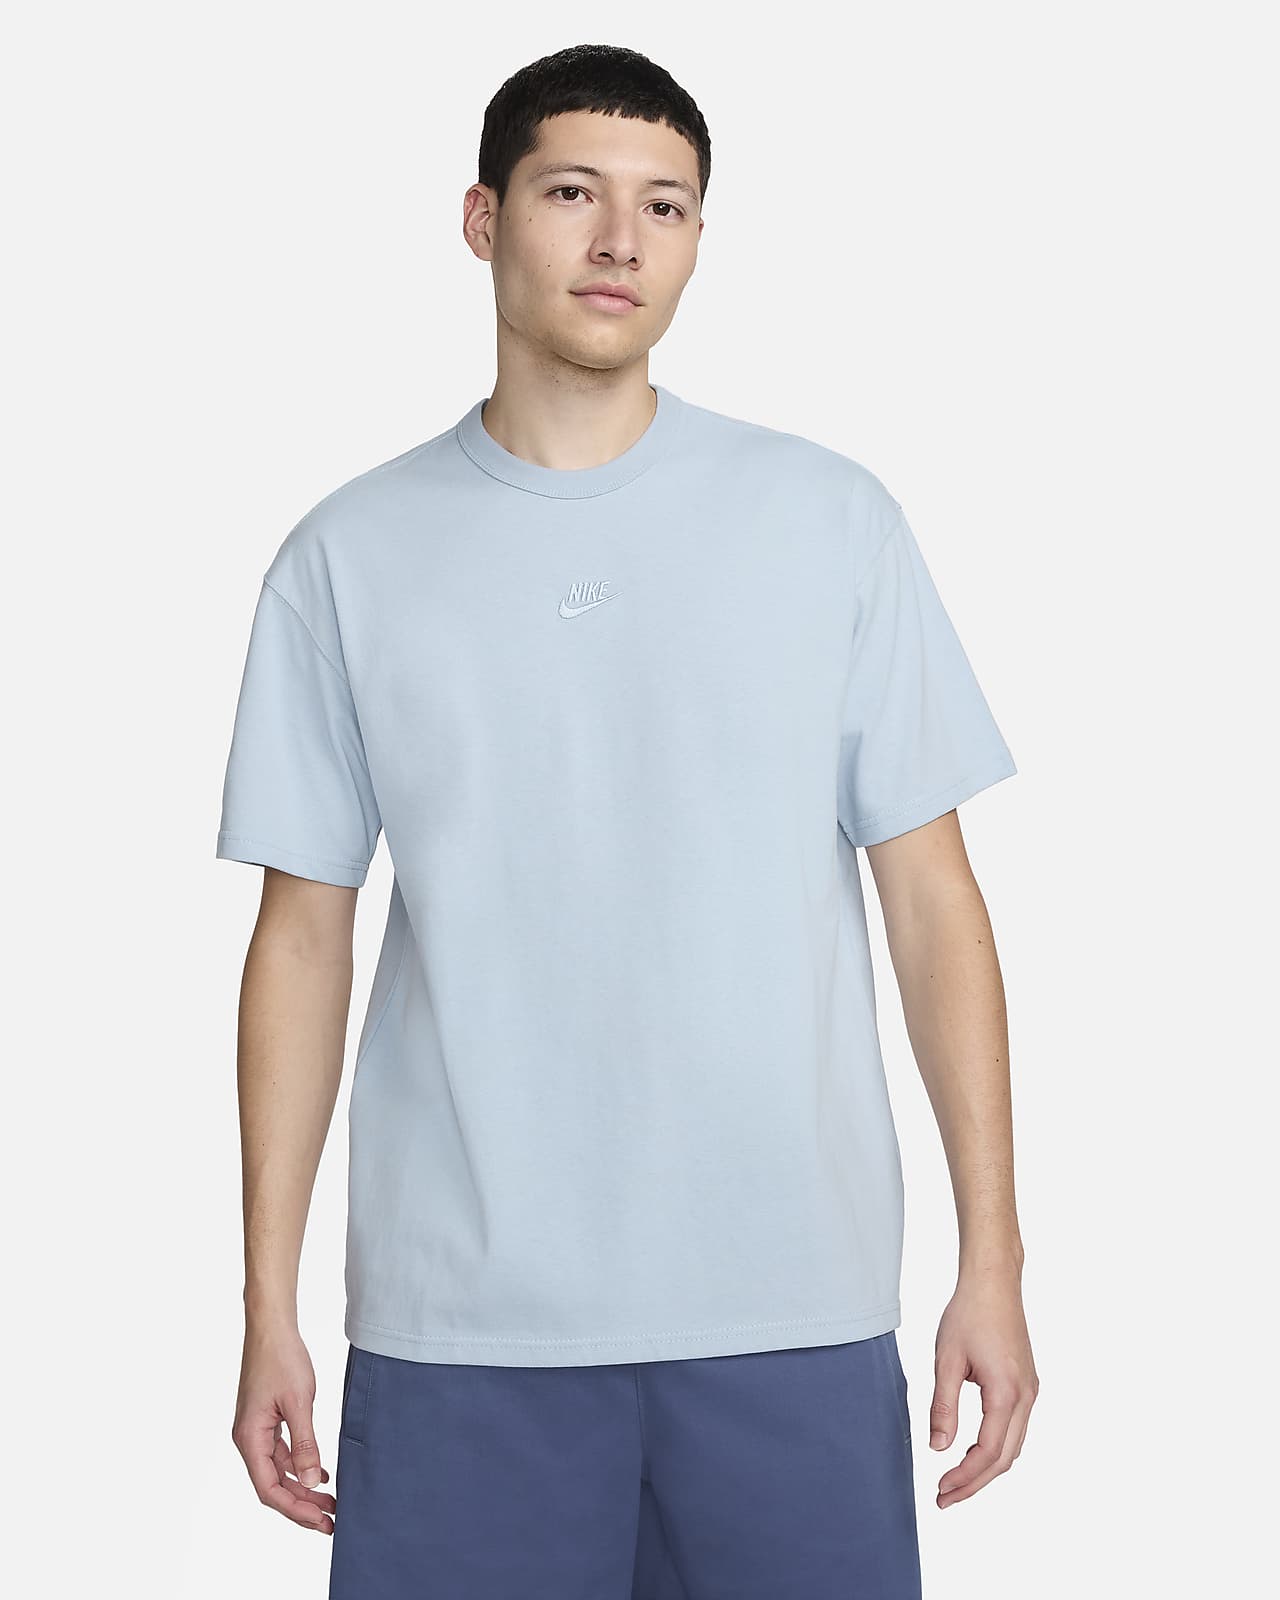 Nike Sportswear Premium Essentials-T-shirt til mænd